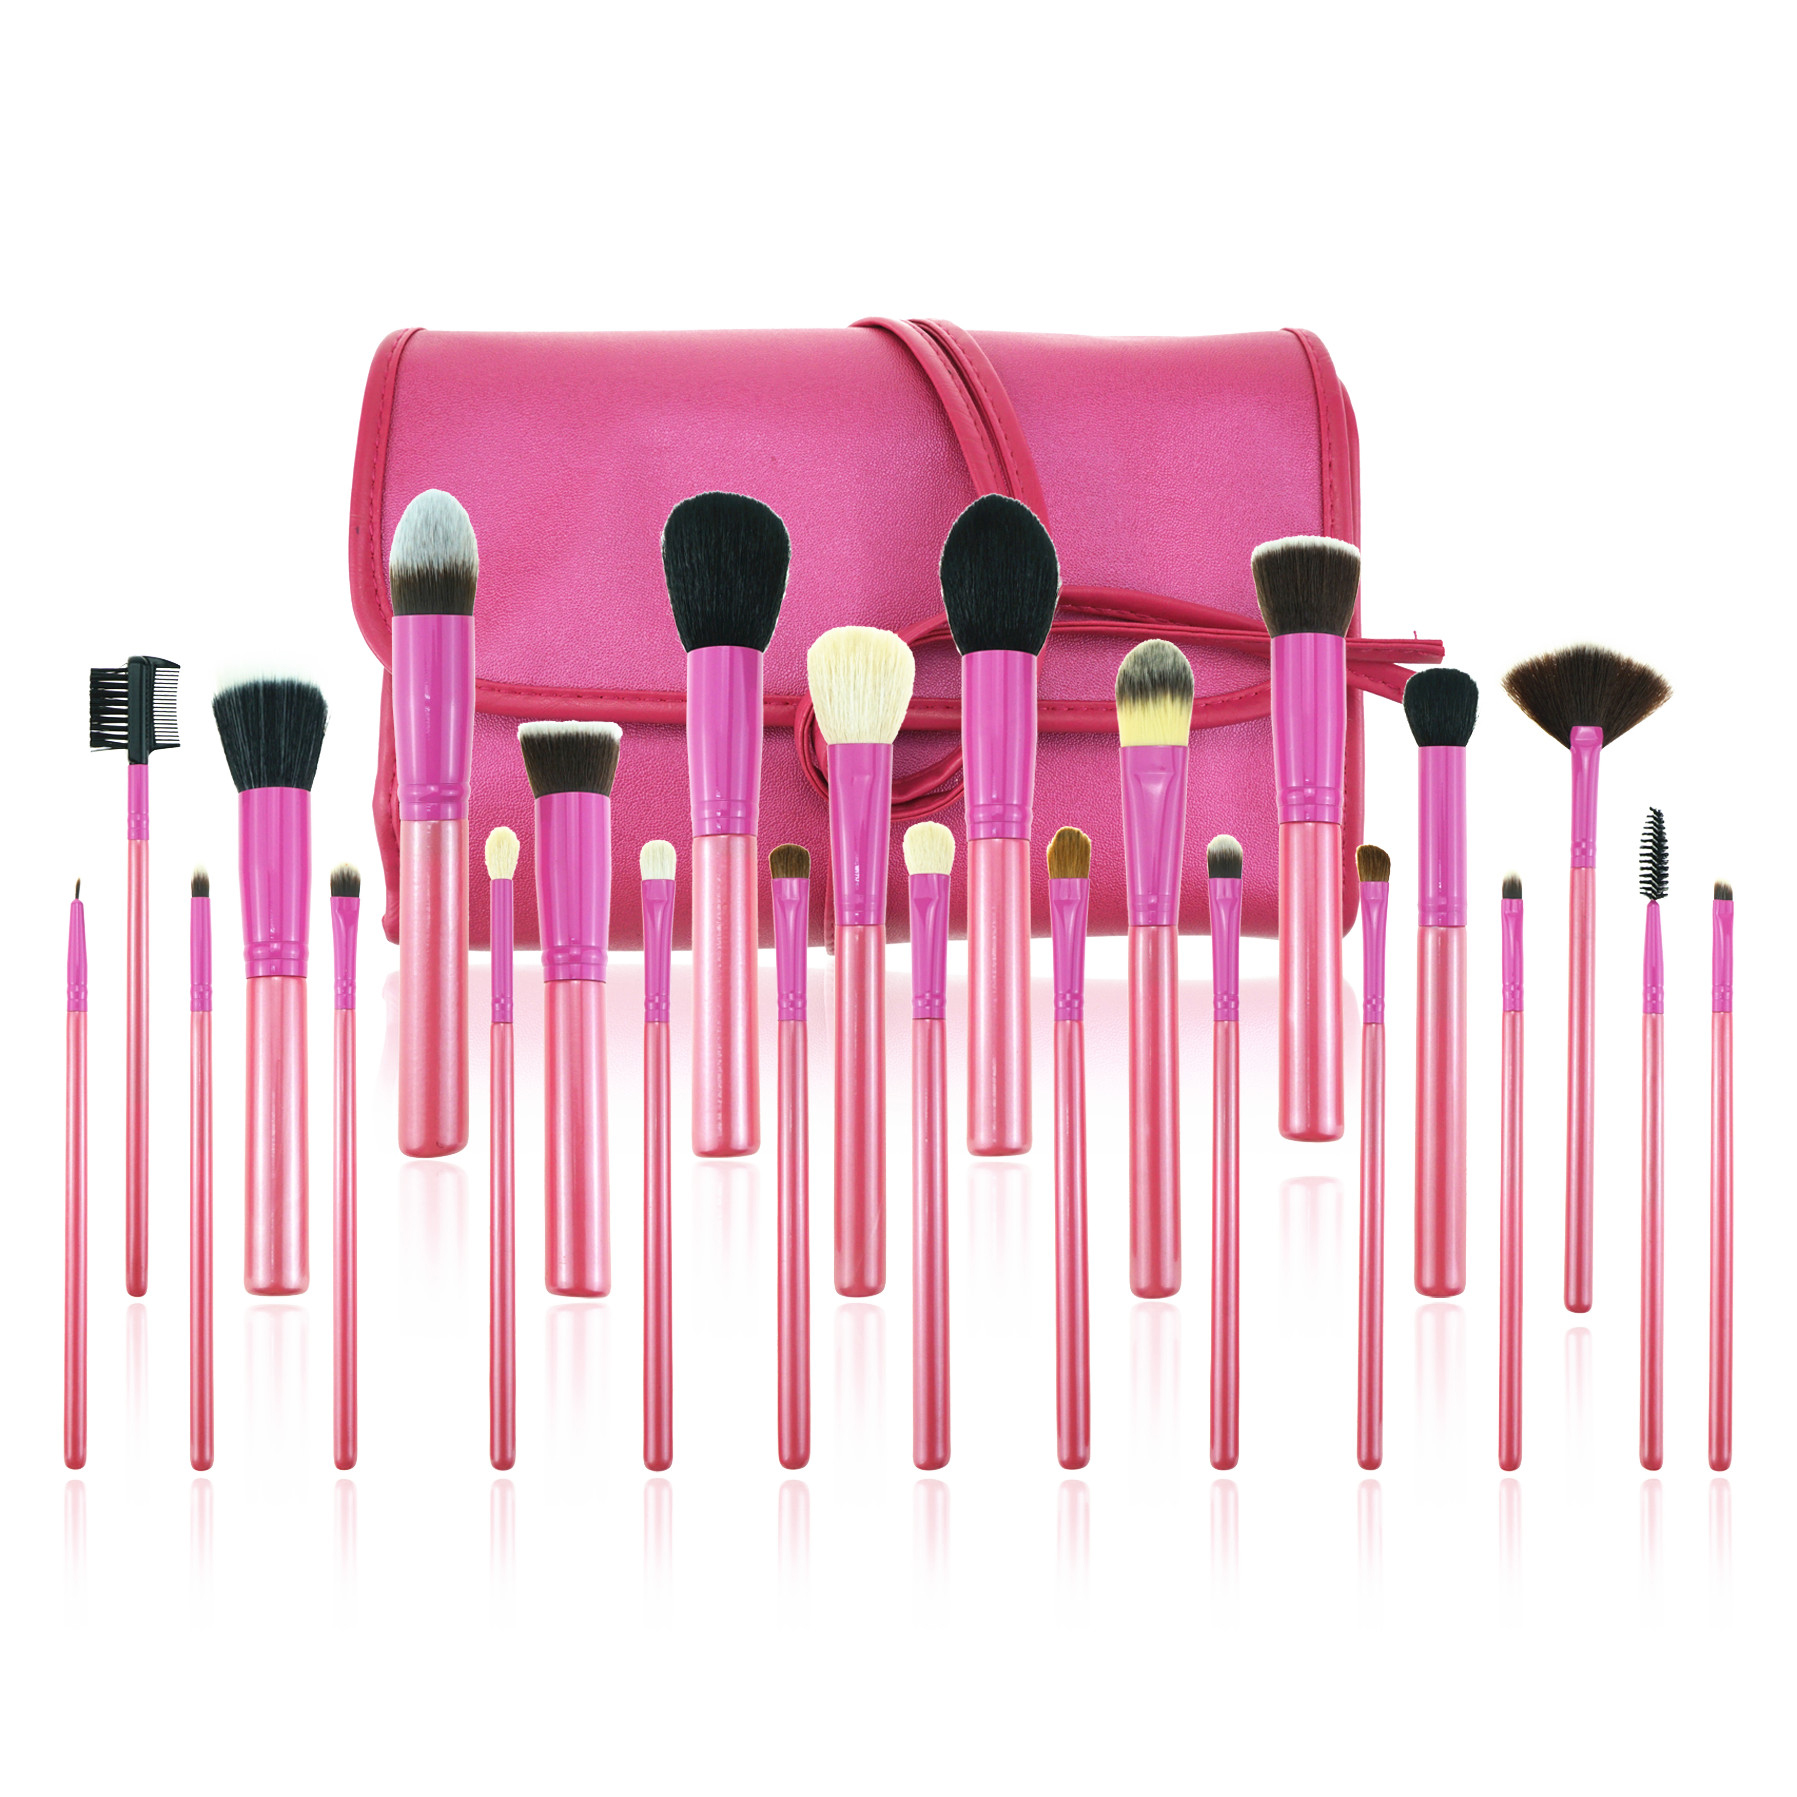 1 New Hot Quantity Soft Blending Eyeshadow Foundation Pink 24 Piece Makeup Brush Kits